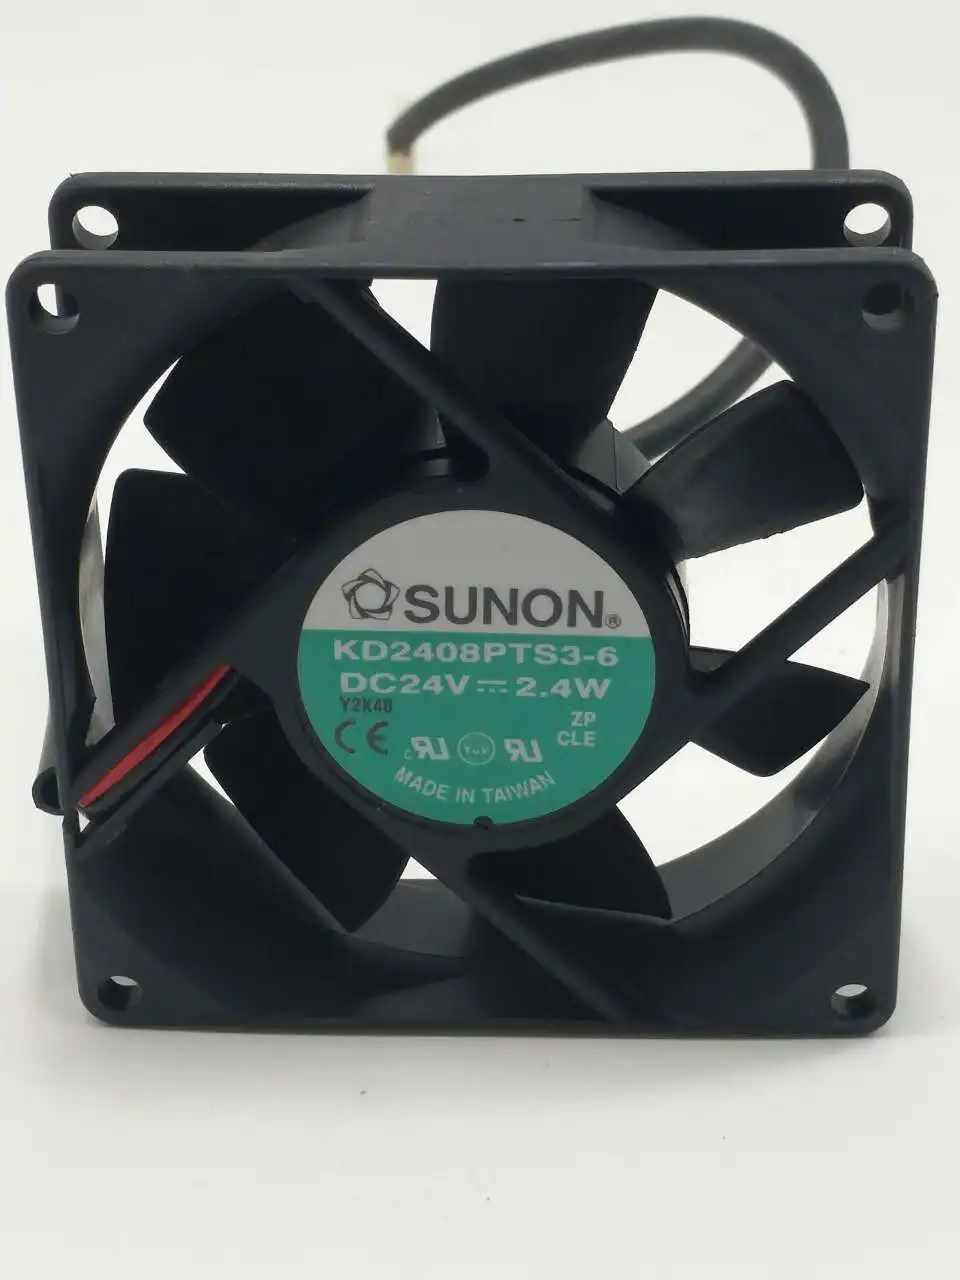 SUNON KD2408PTB3-6 Server Cooling Fan DC 24V 2.4W 80x80x25mm 2-Wire